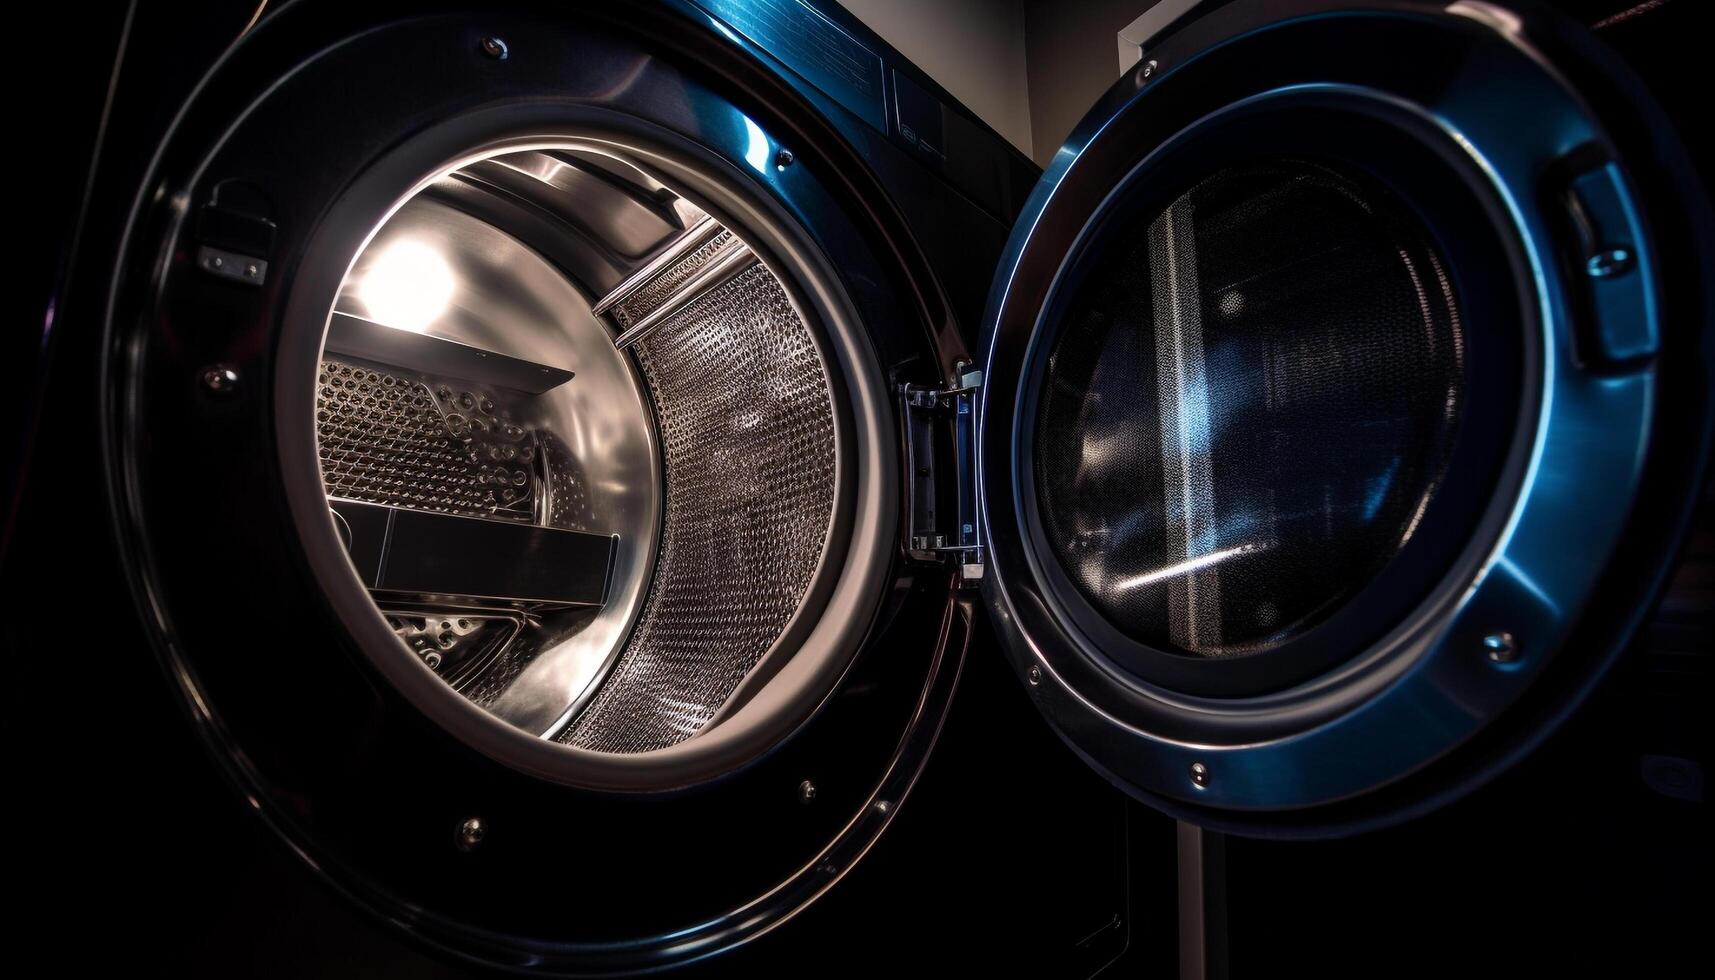 moderno lavando máquina rotaciona metálico roupas dentro limpar \ limpo lavanderia gerado de ai foto